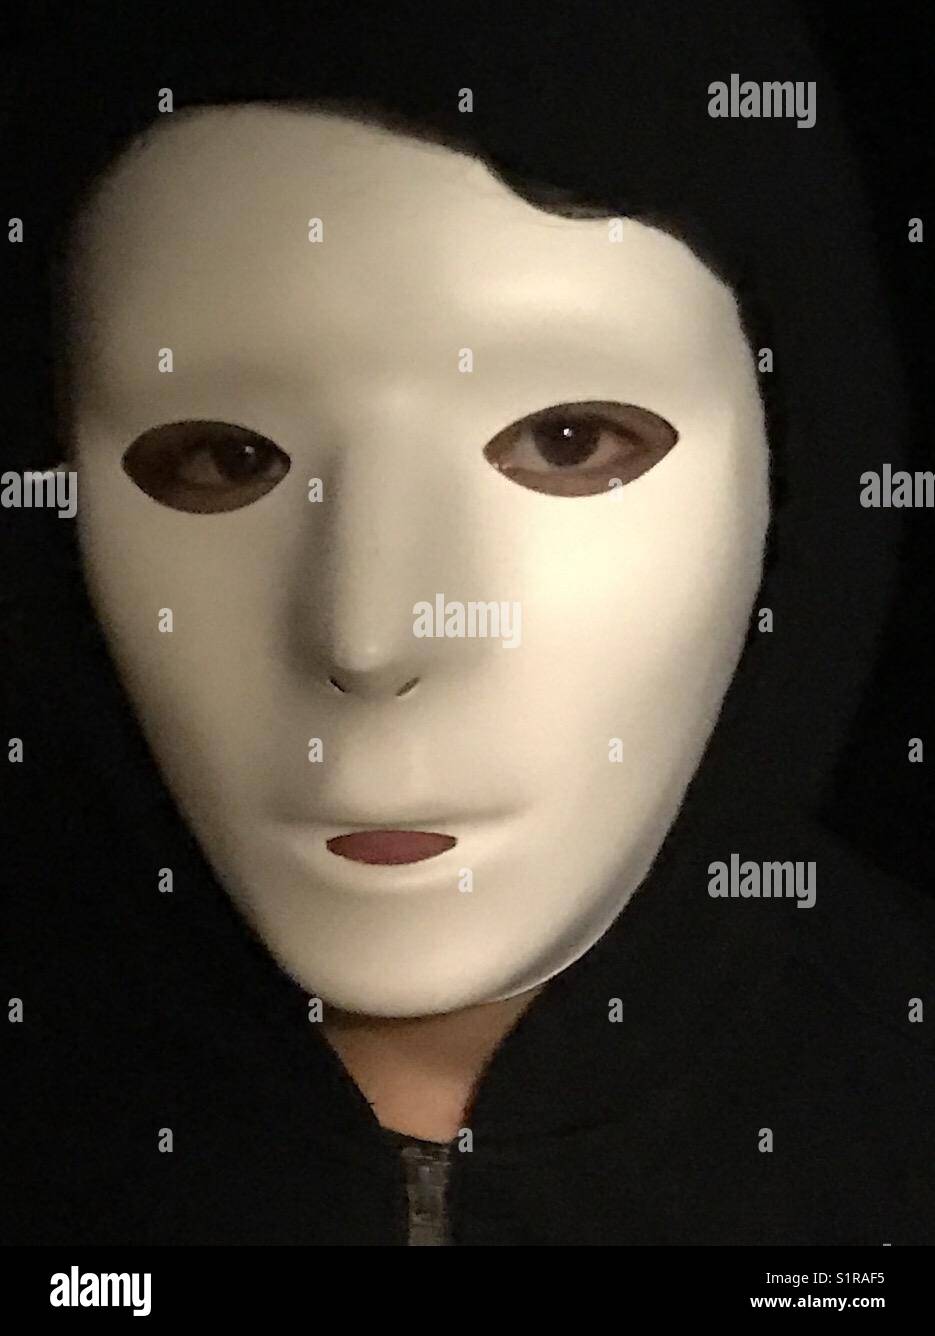 Creepy Halloween mask Stock Photo